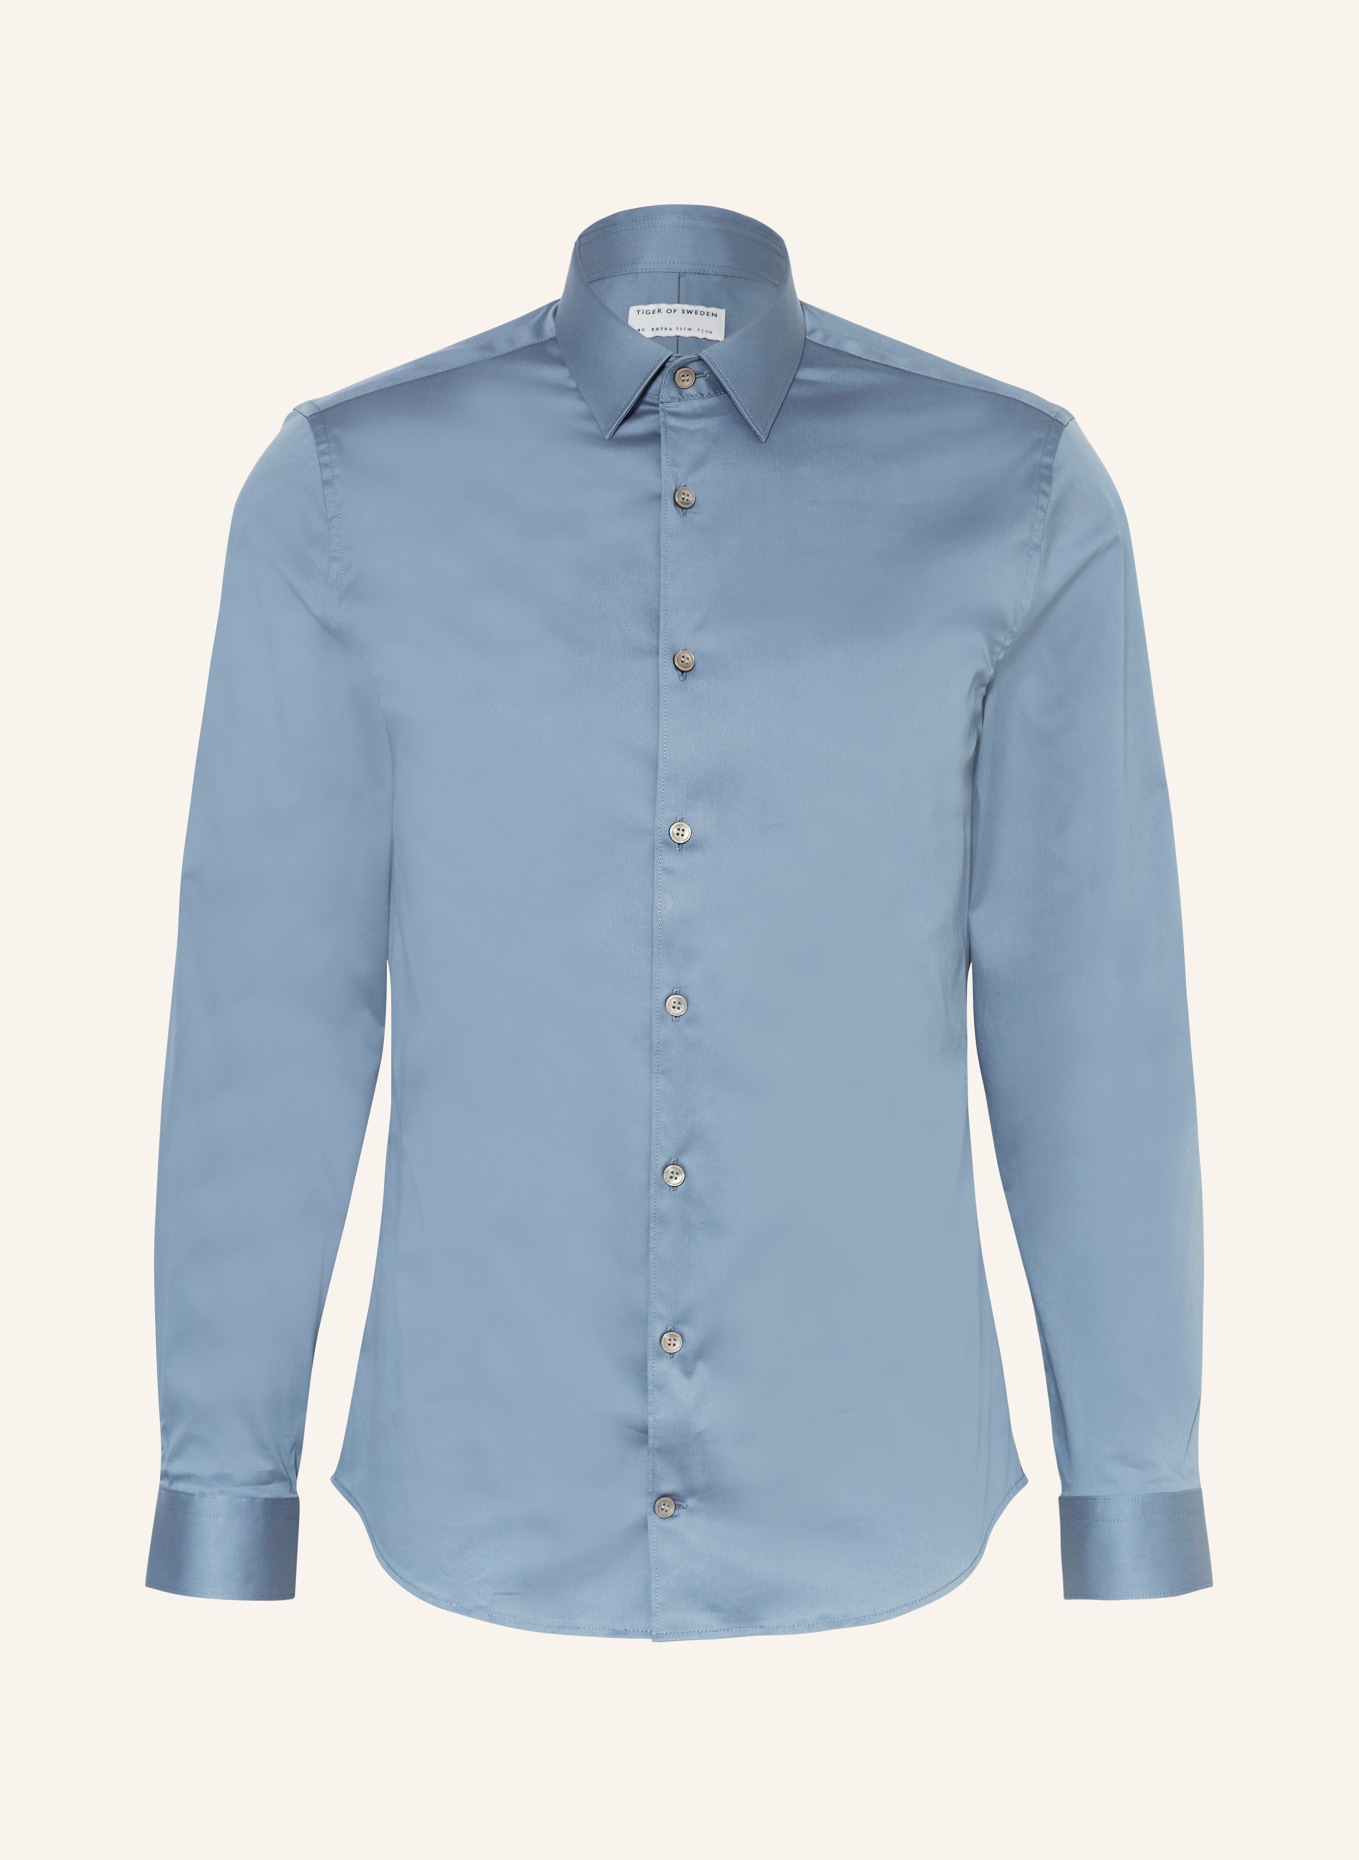 TIGER OF SWEDEN Hemd FILBRODIE Extra Slim Fit, Farbe: BLAUGRAU (Bild 1)